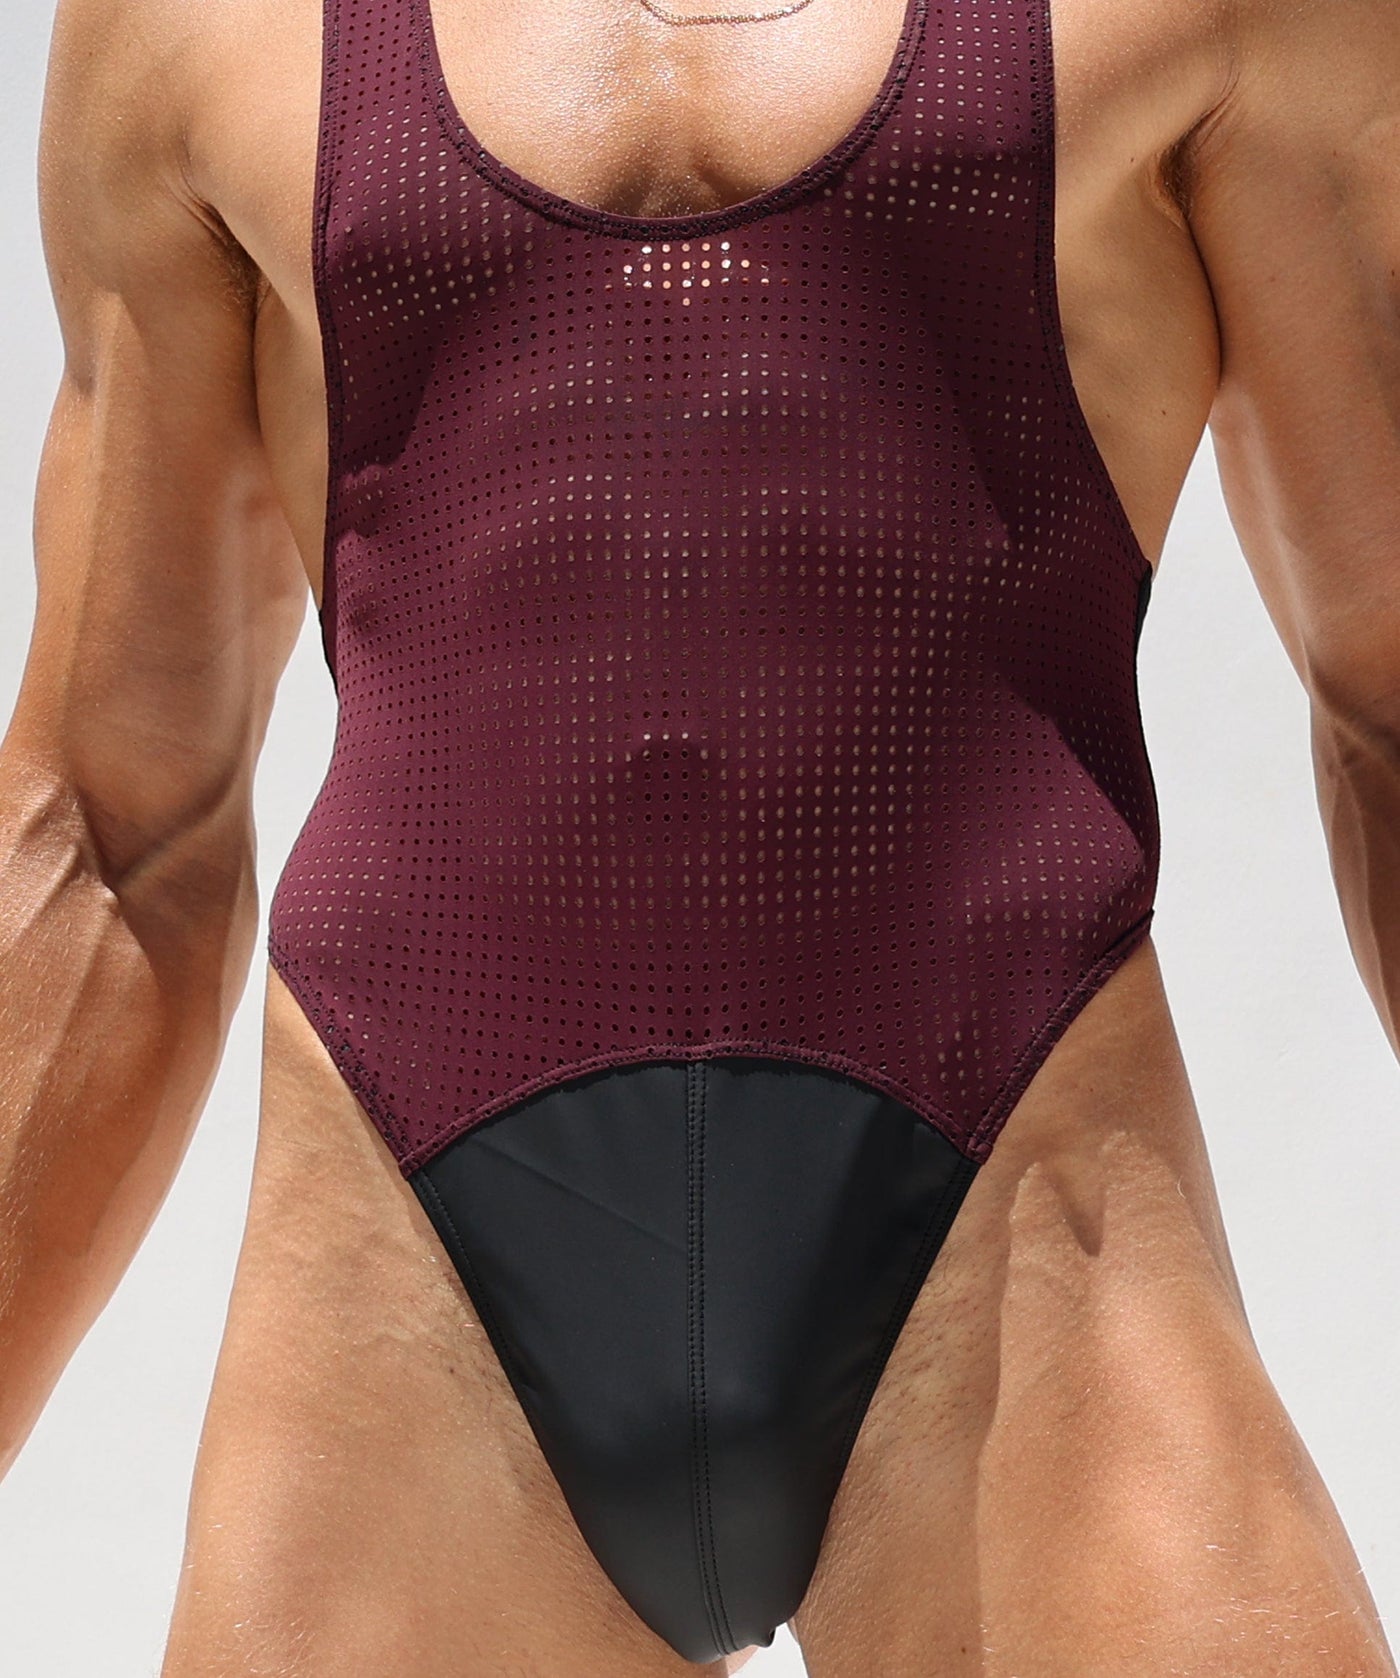 RUFSKIN® AERIAL Stretch Perforated Mesh Thong Bodysuit